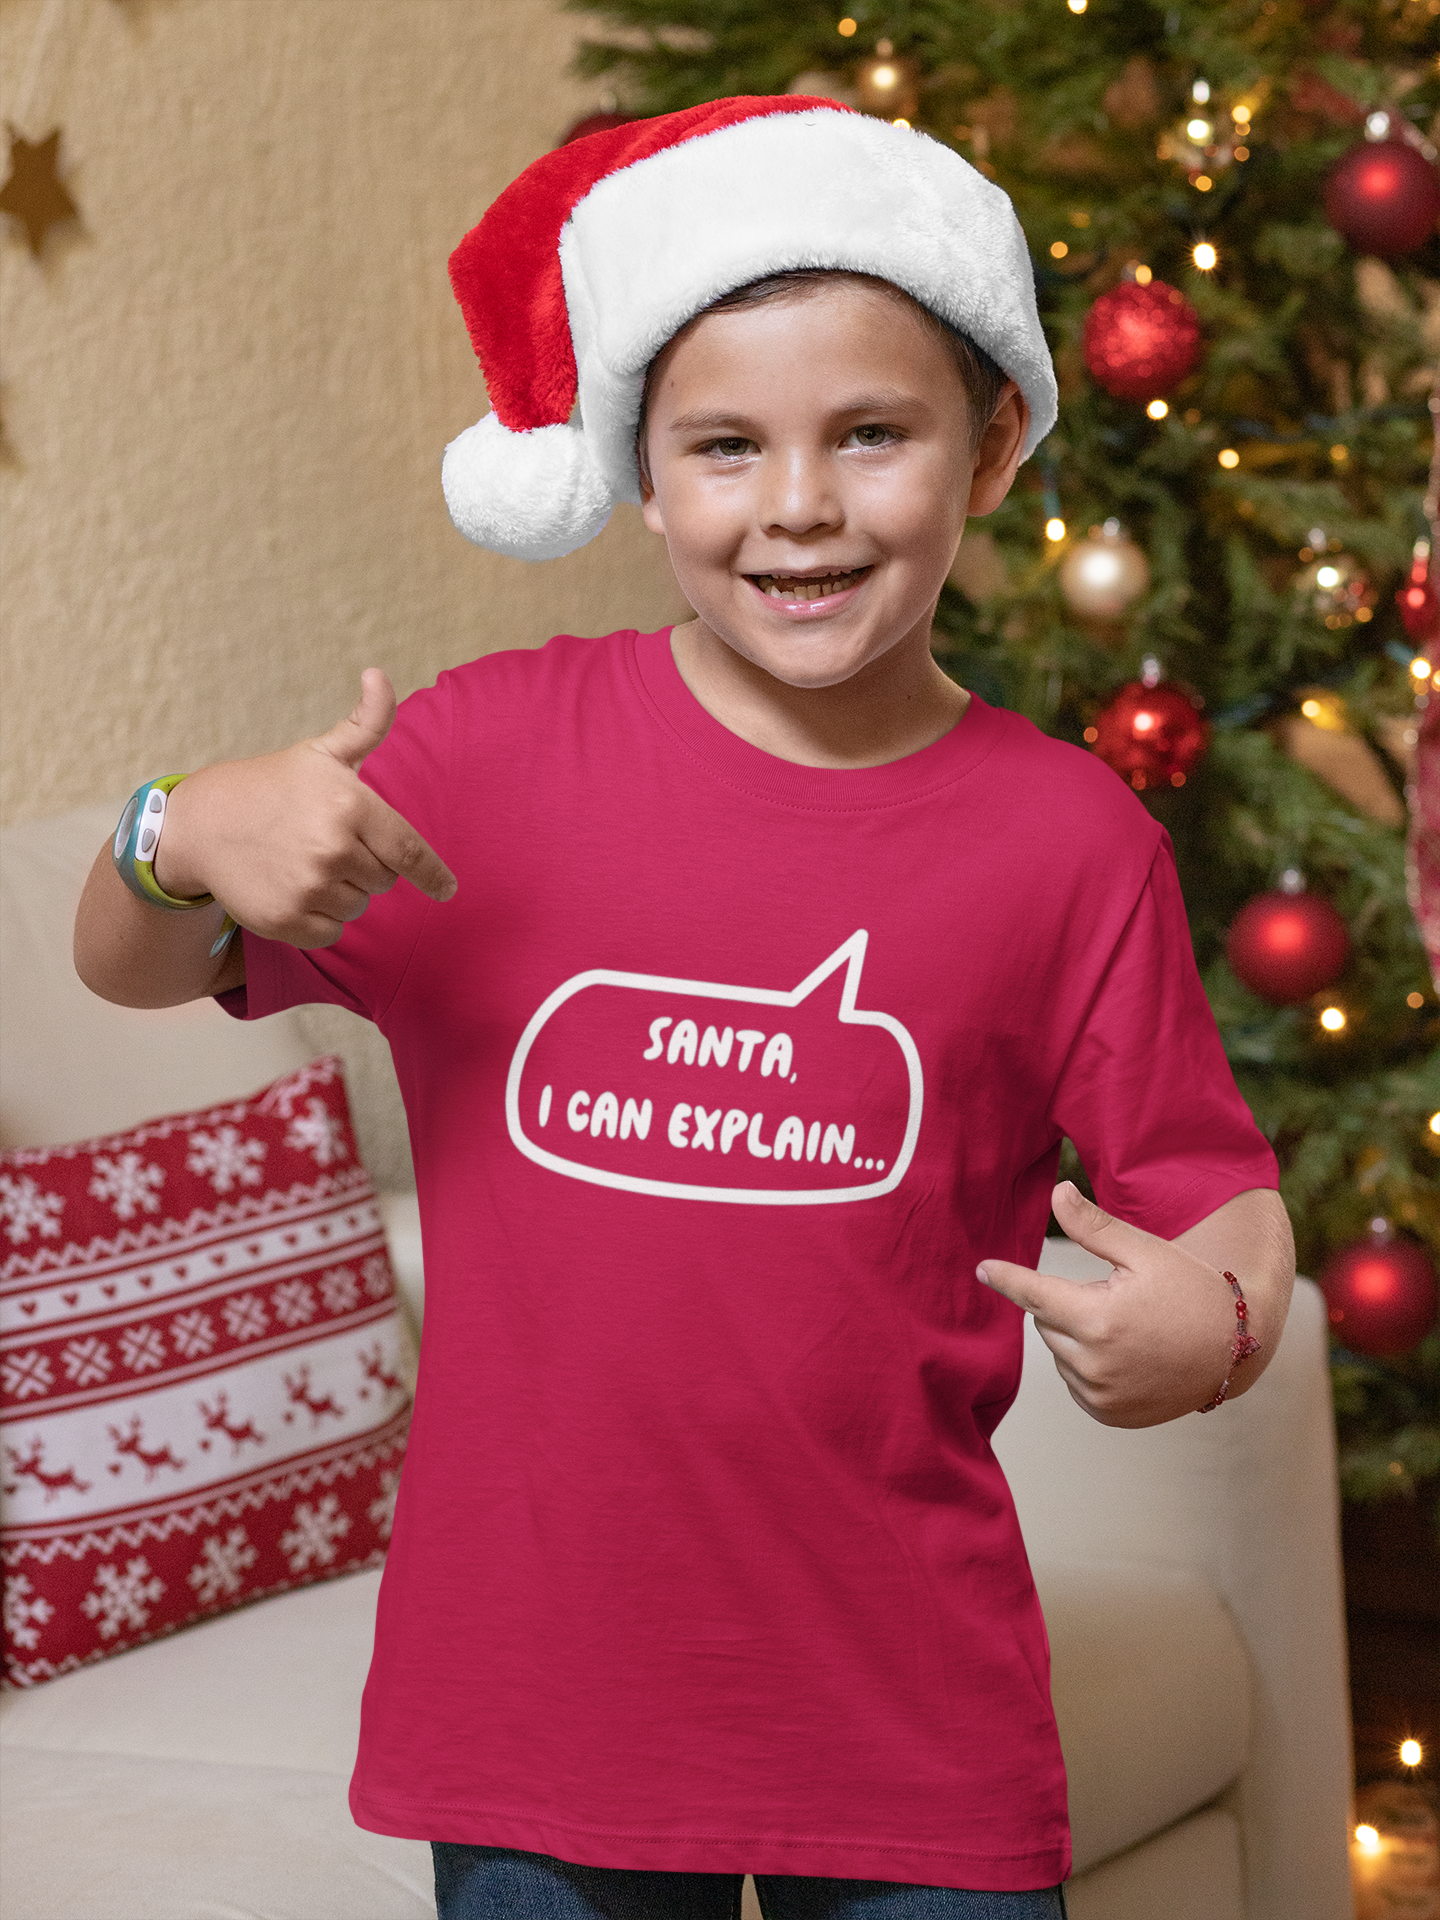 Santa, I Can Explain... Kids T-Shirt